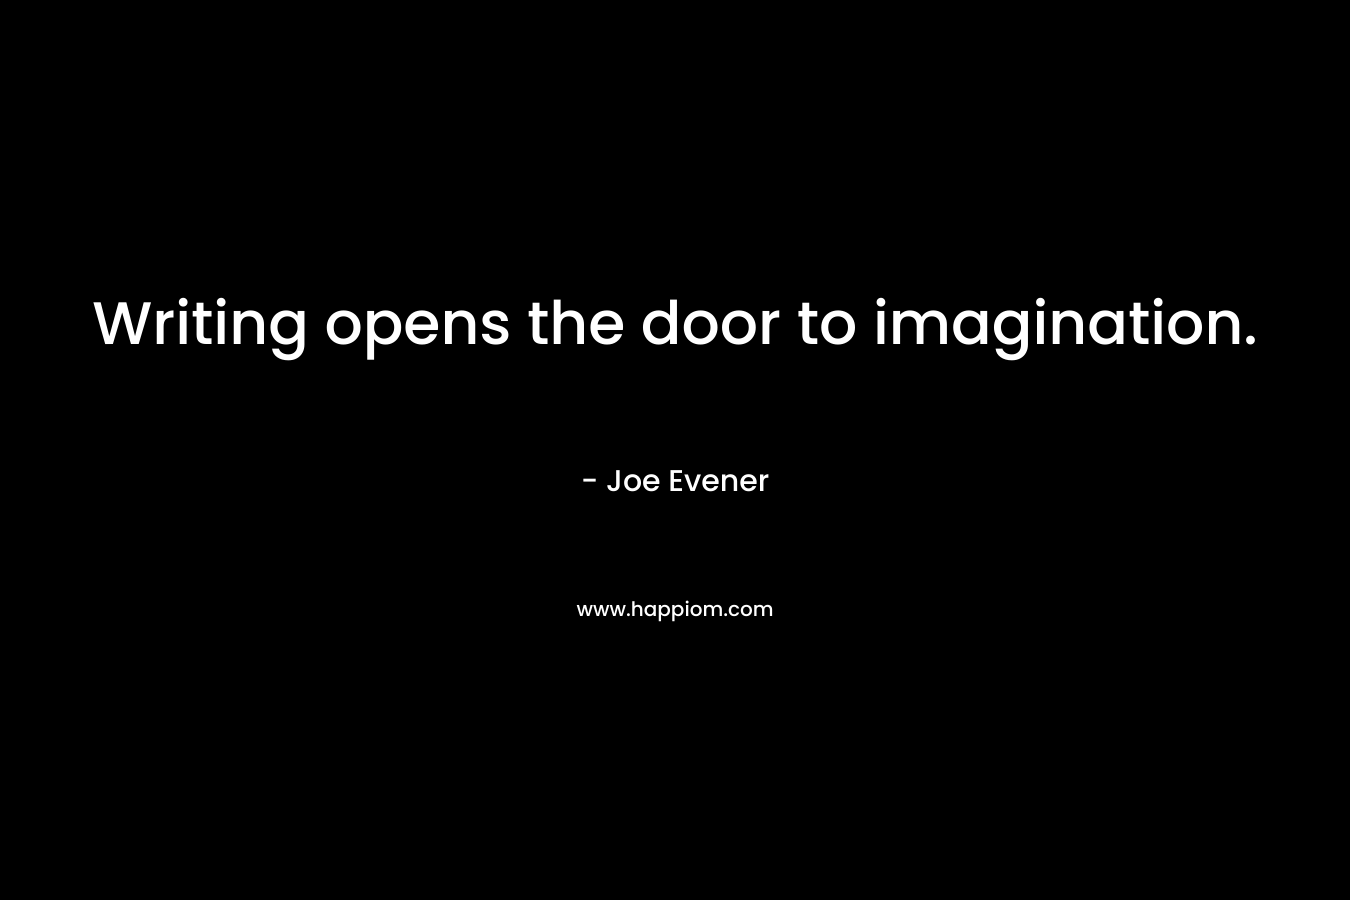 Writing opens the door to imagination.